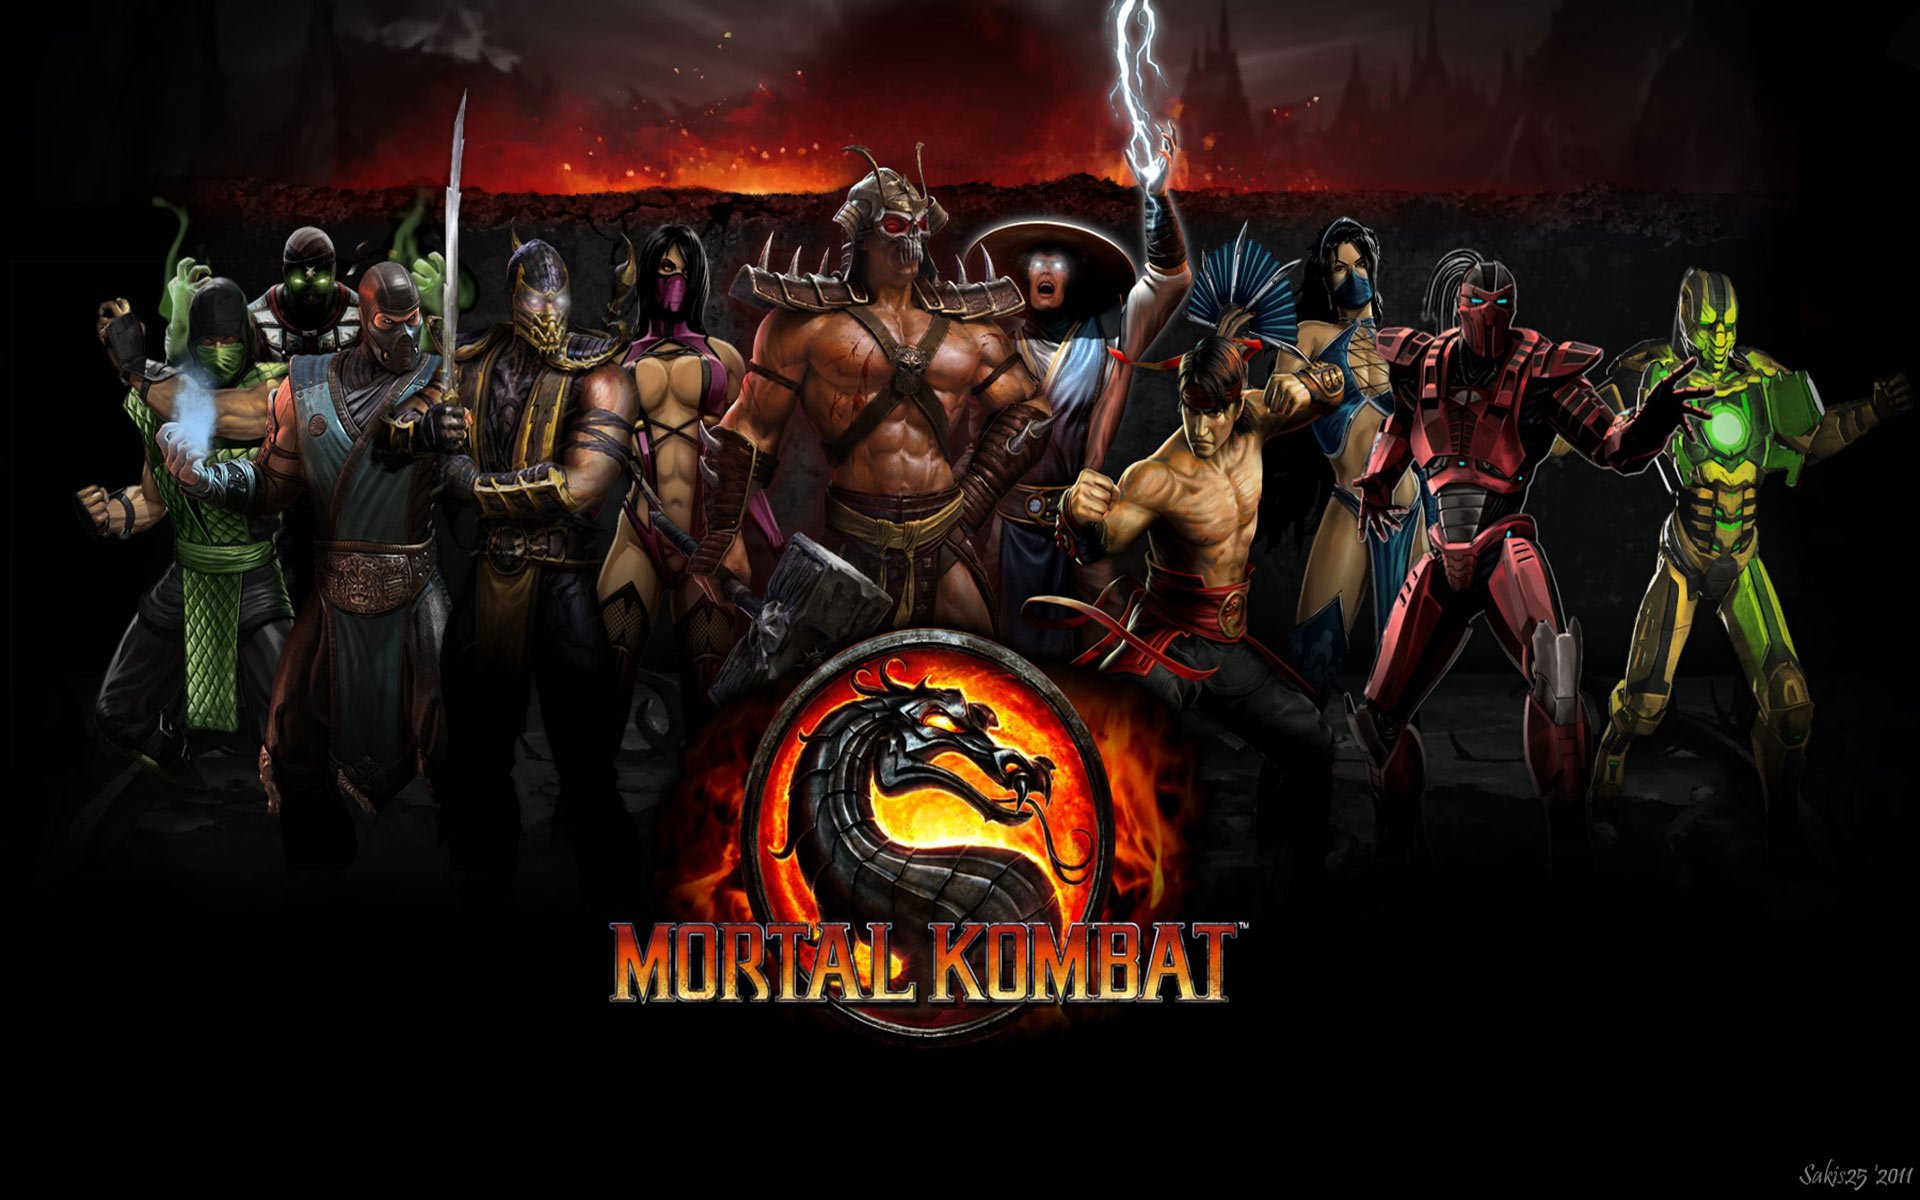 Mortal kombat background